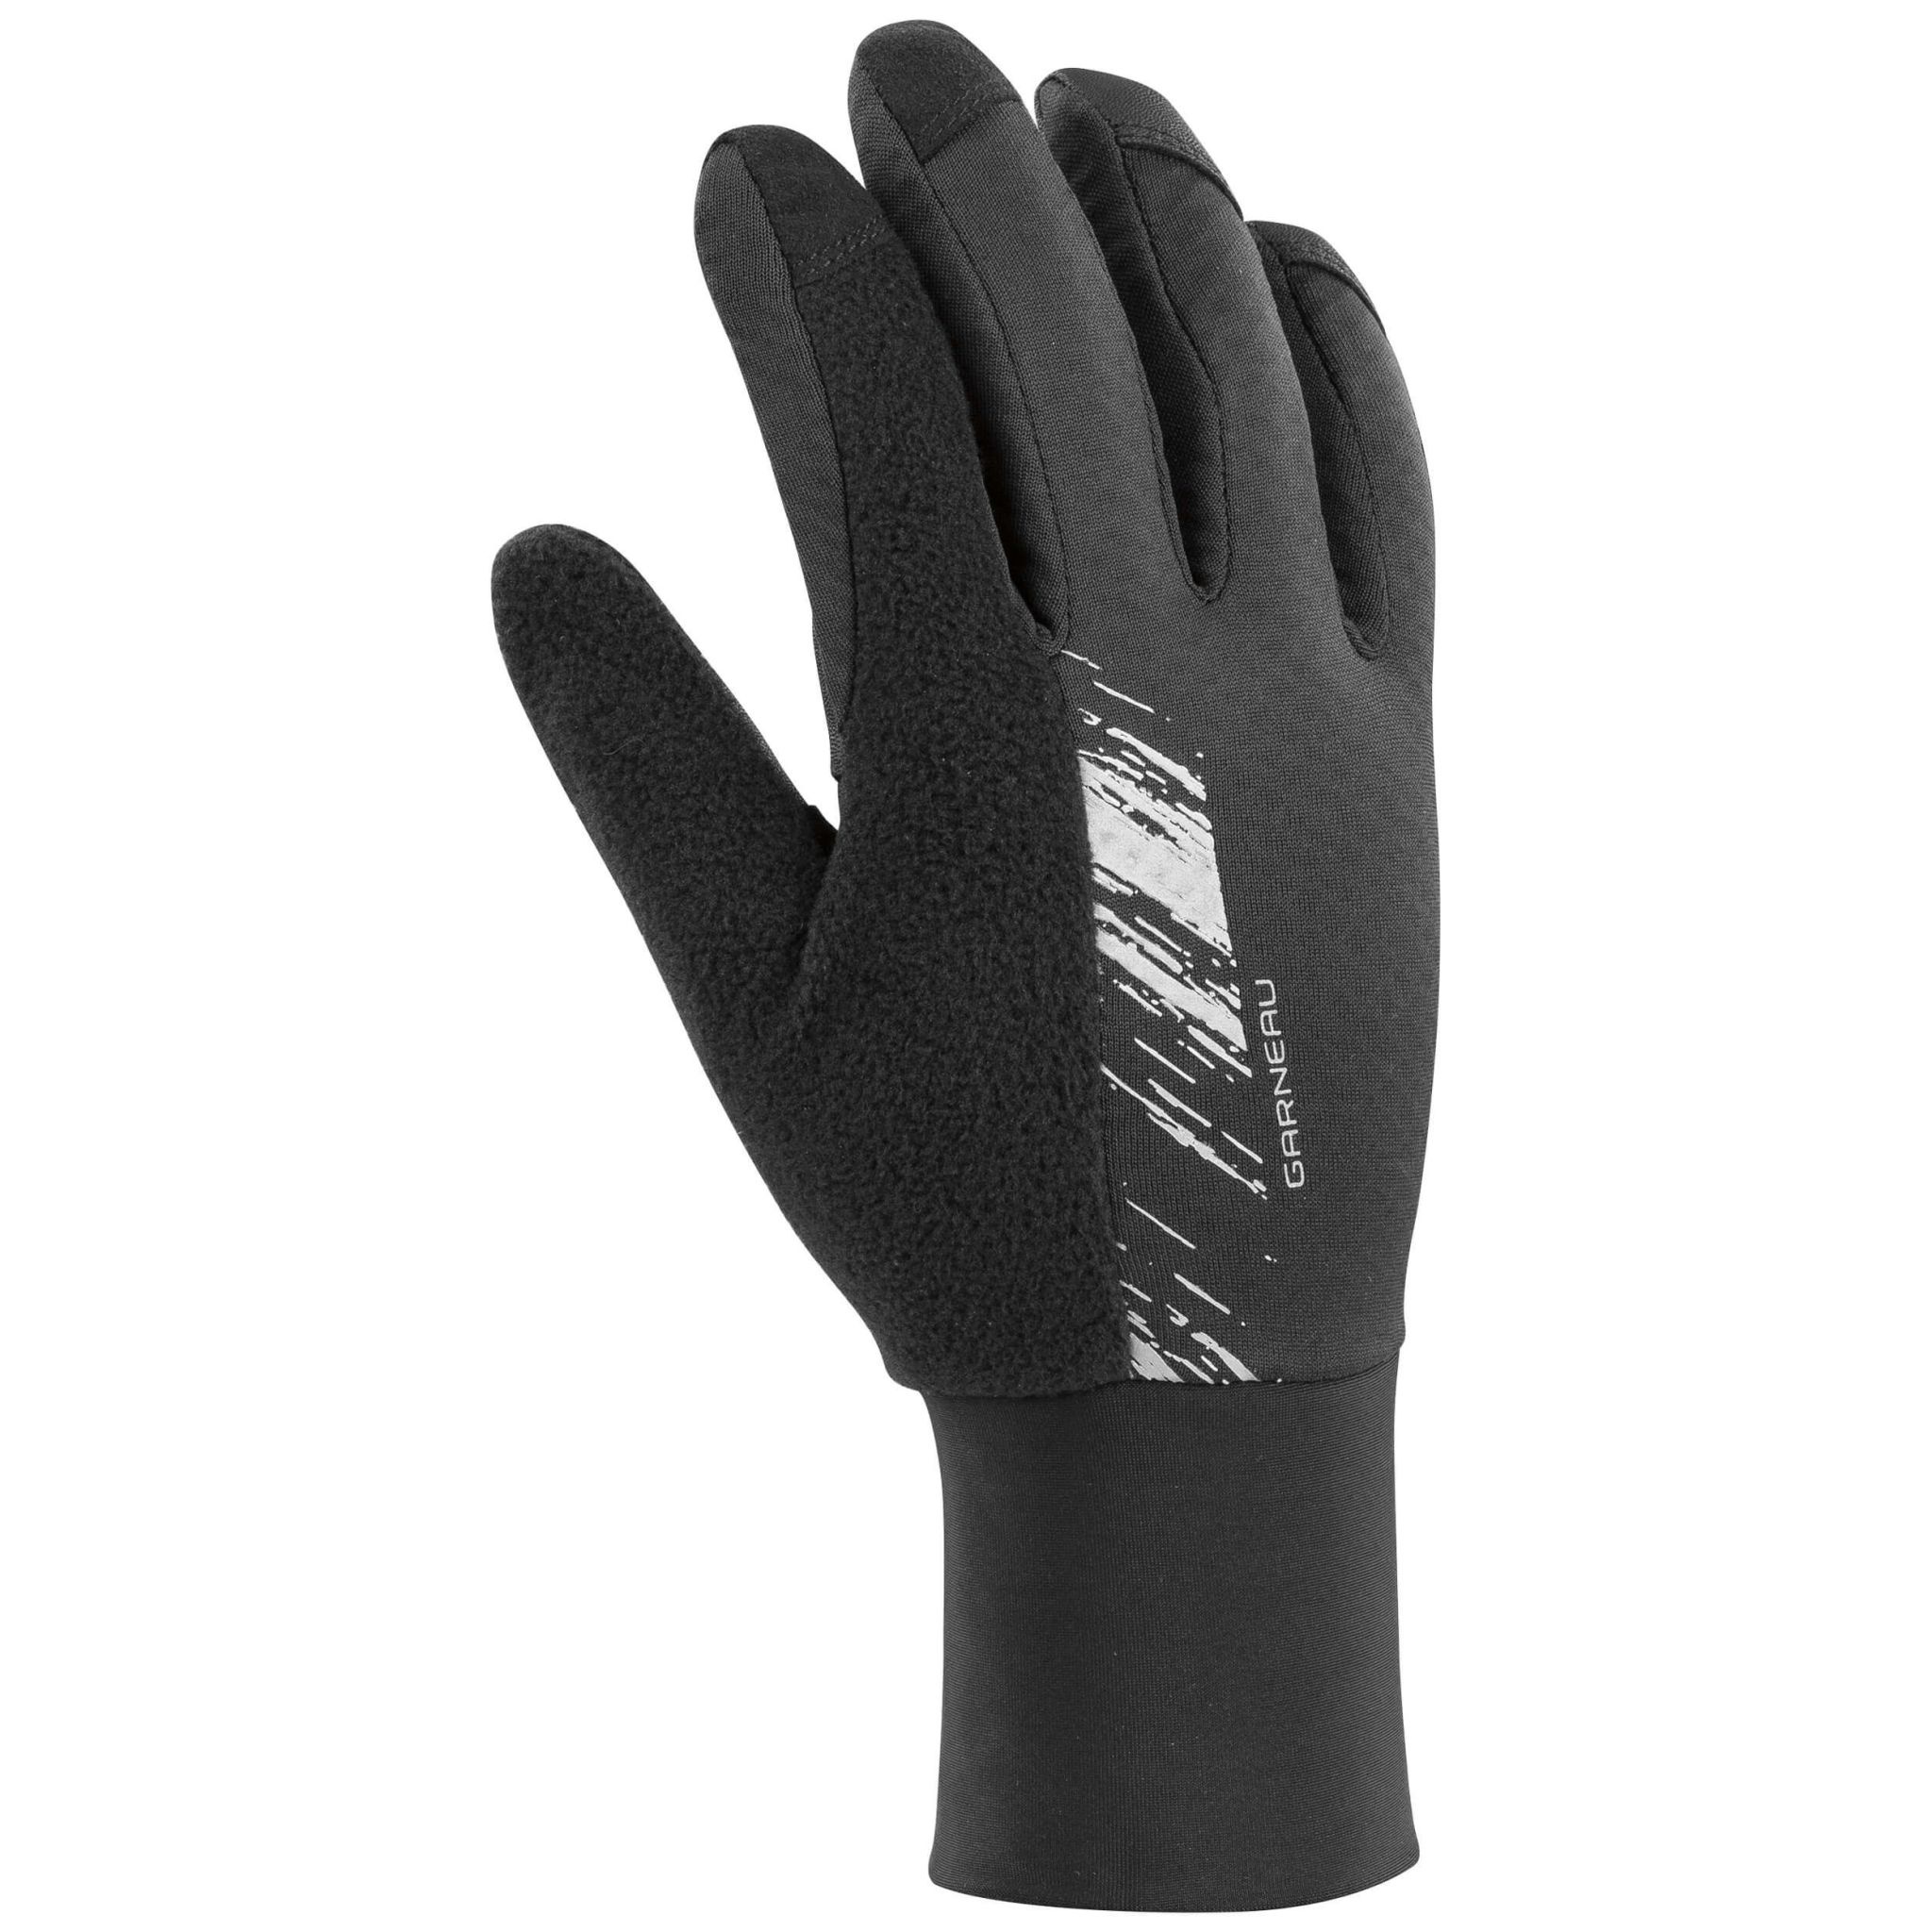 Garneau Biogel thermo women's gloves